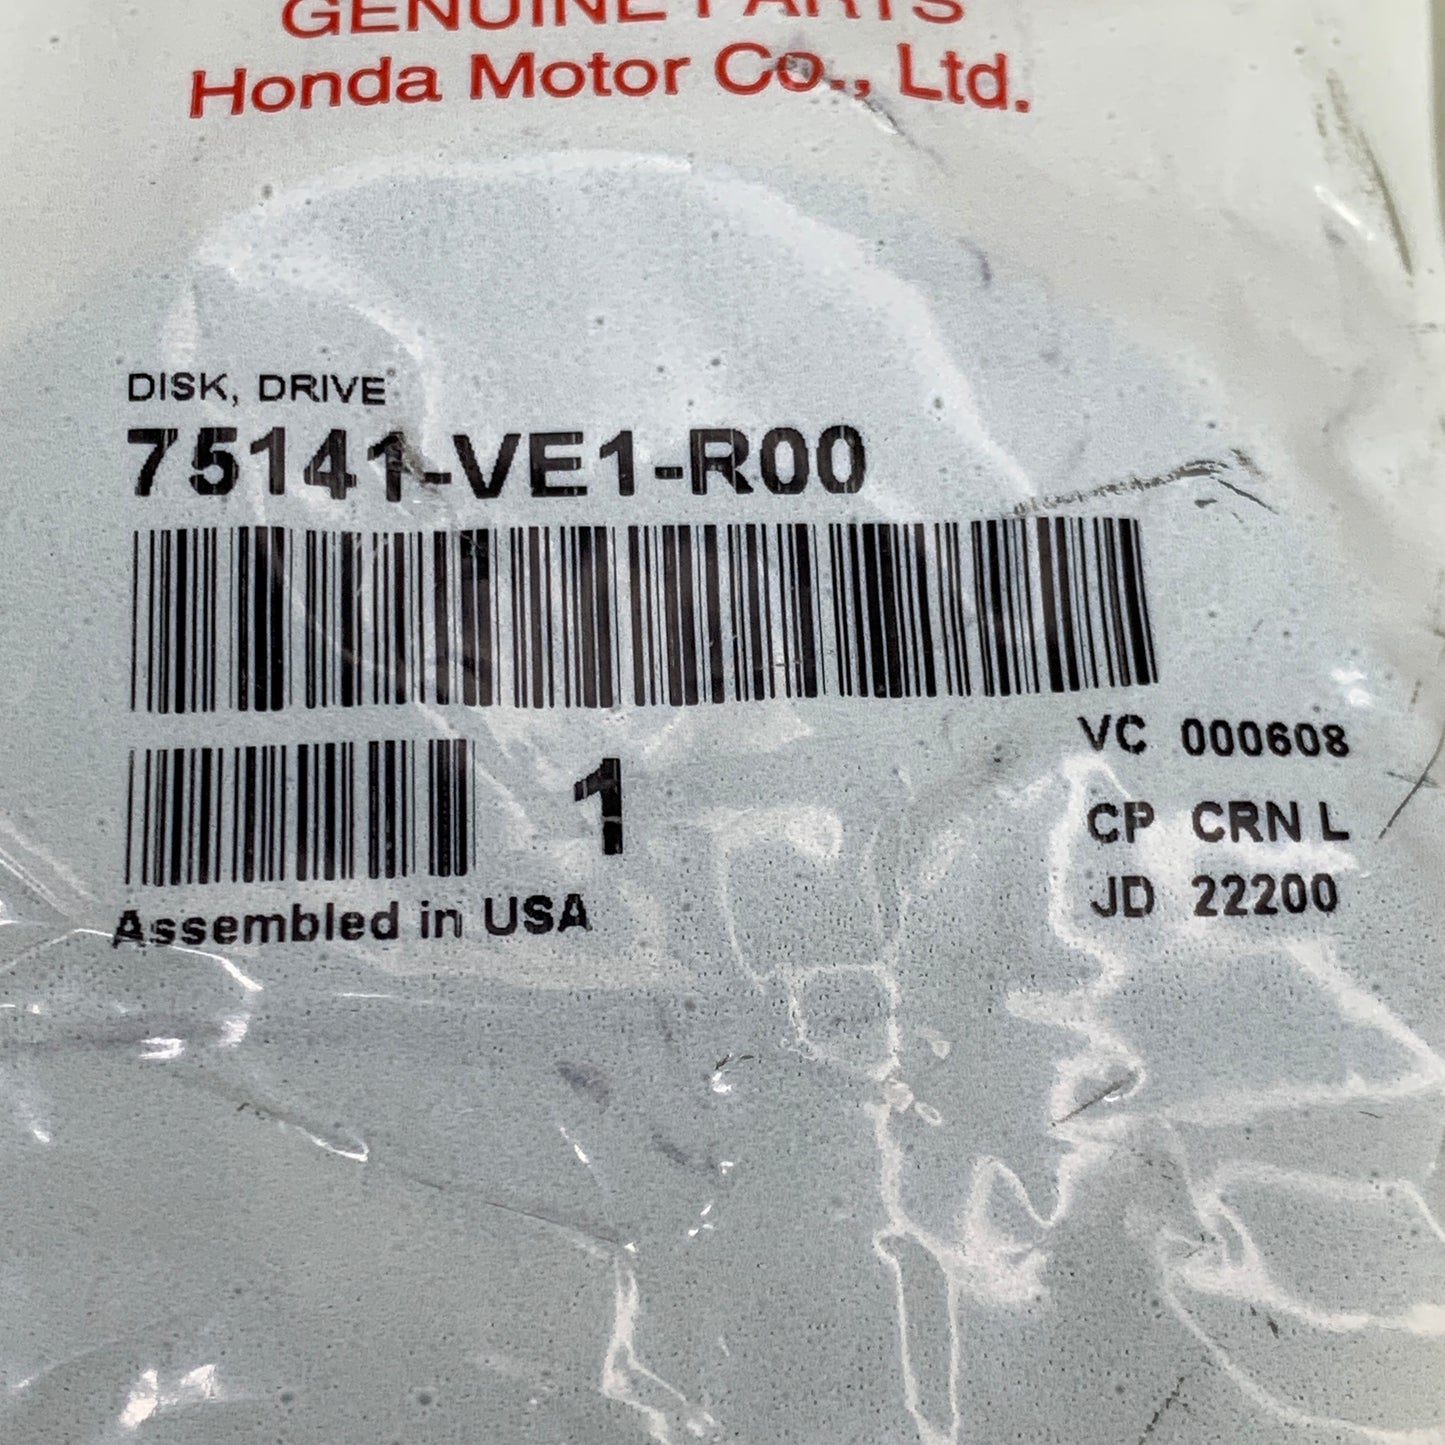 HONDA Equipment Drive Disk 75141-VE1-R00